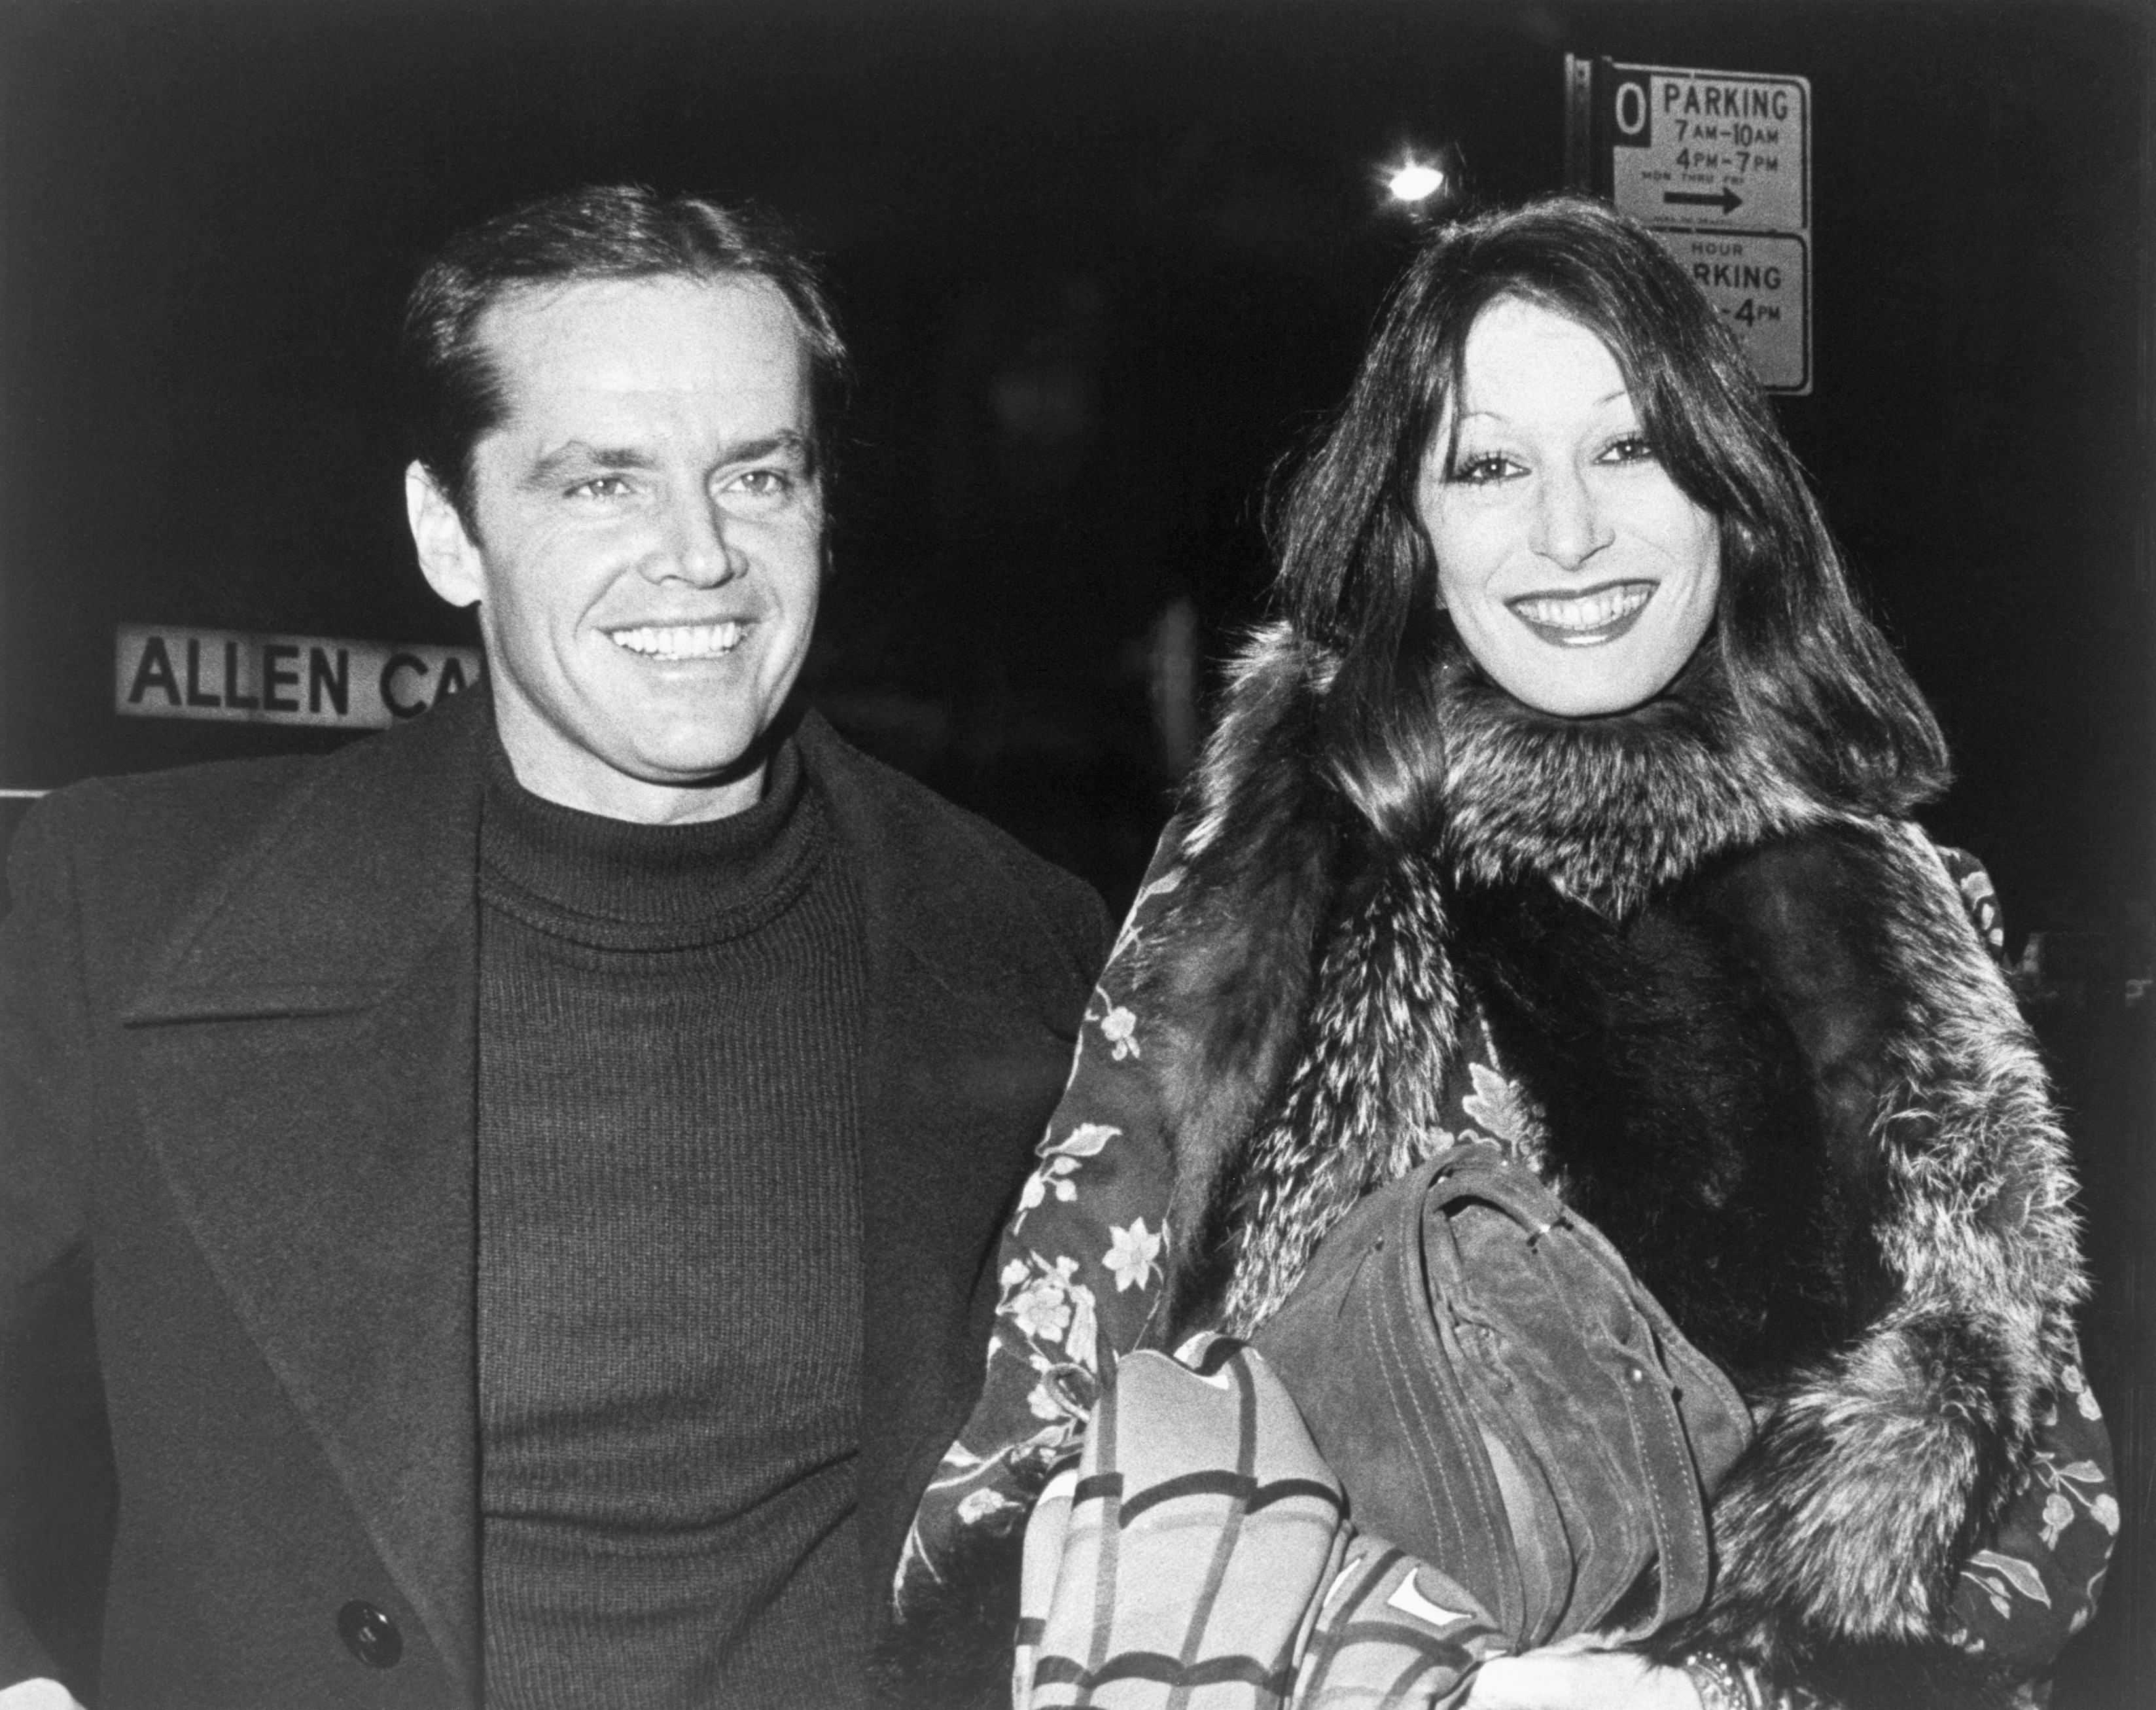 1974: Jack Nicholson and Anjelica Huston